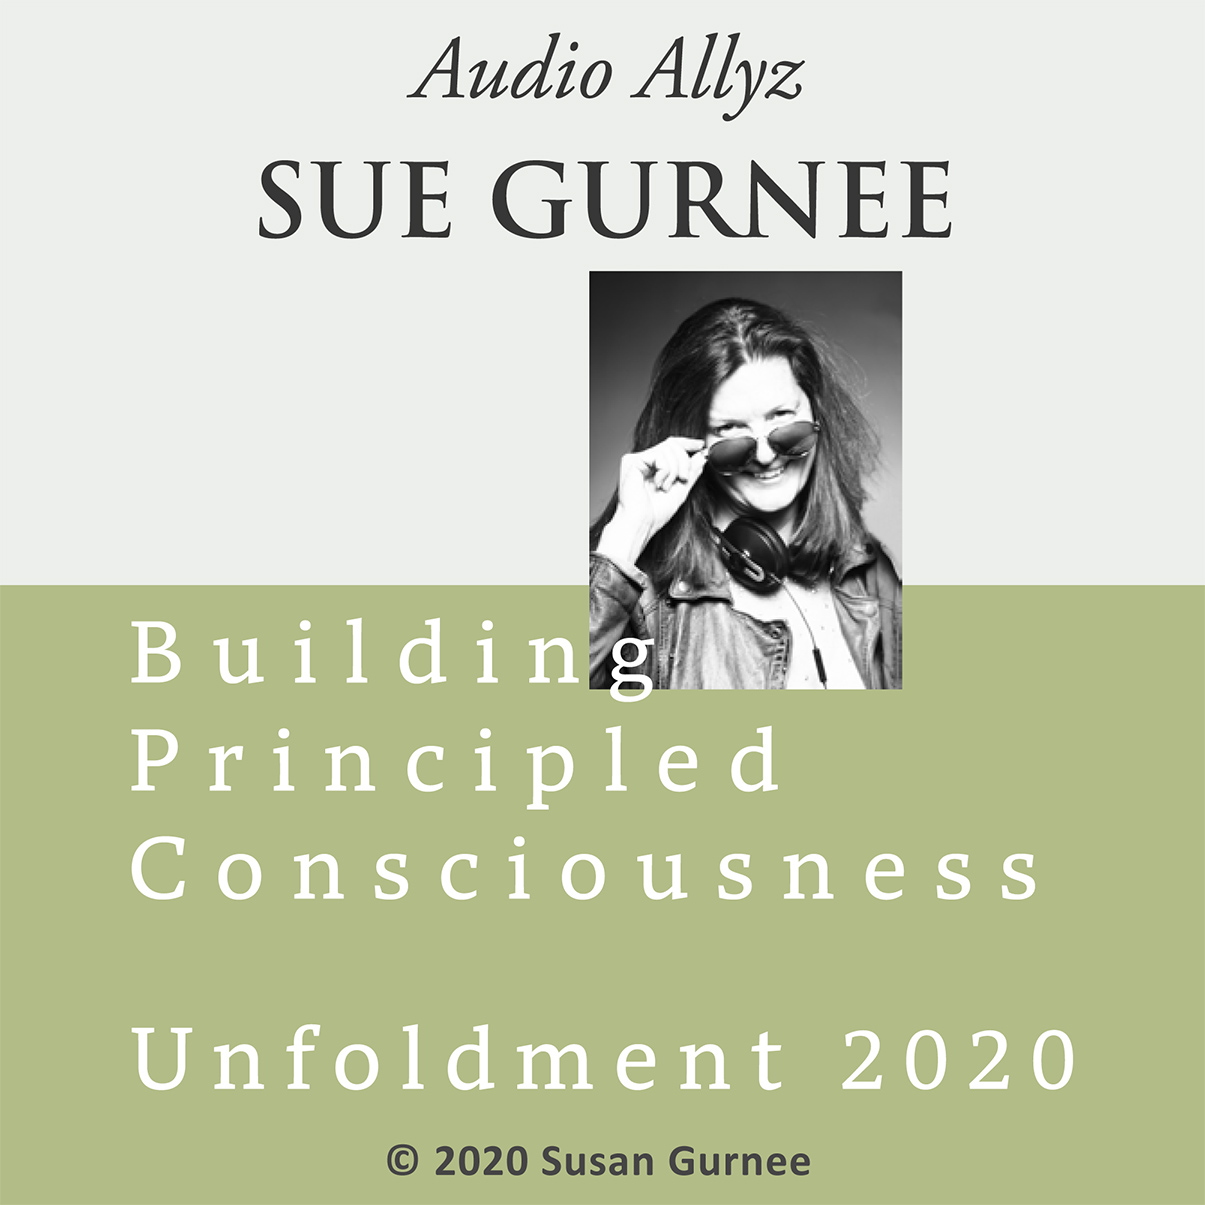 Click here for Unfoldment 2020 - Building Principled Consciousness